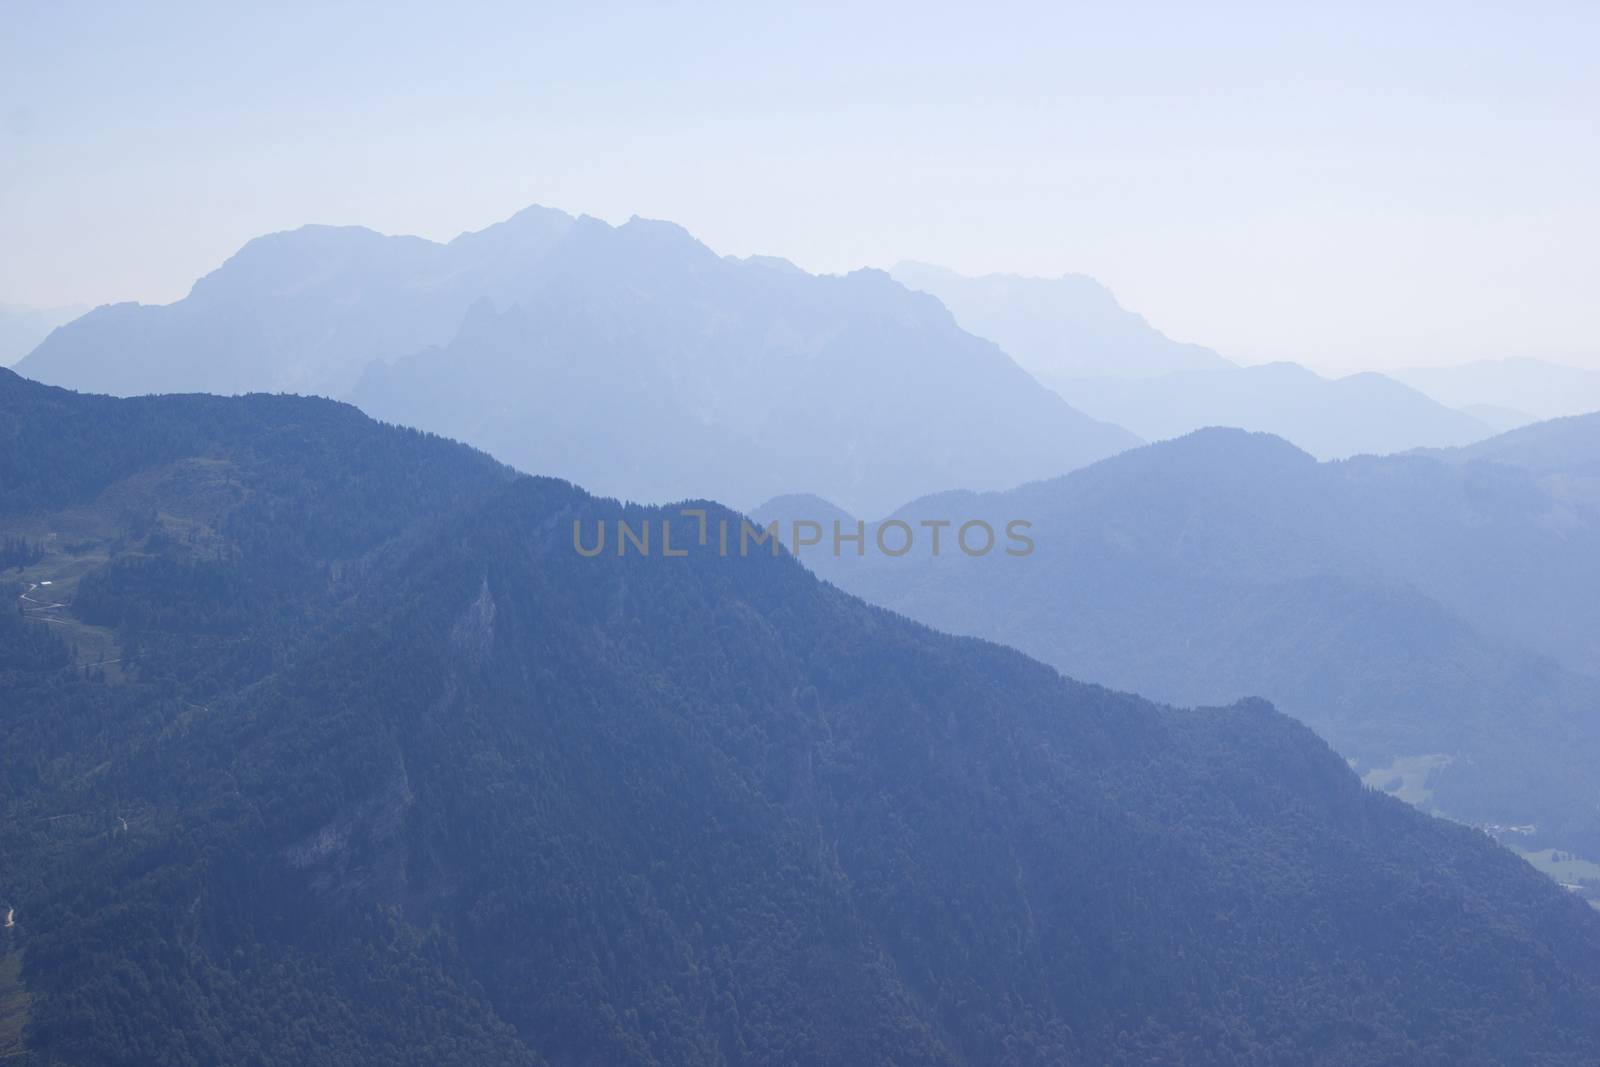 a beautiful view of the austrian Alps by miradrozdowski